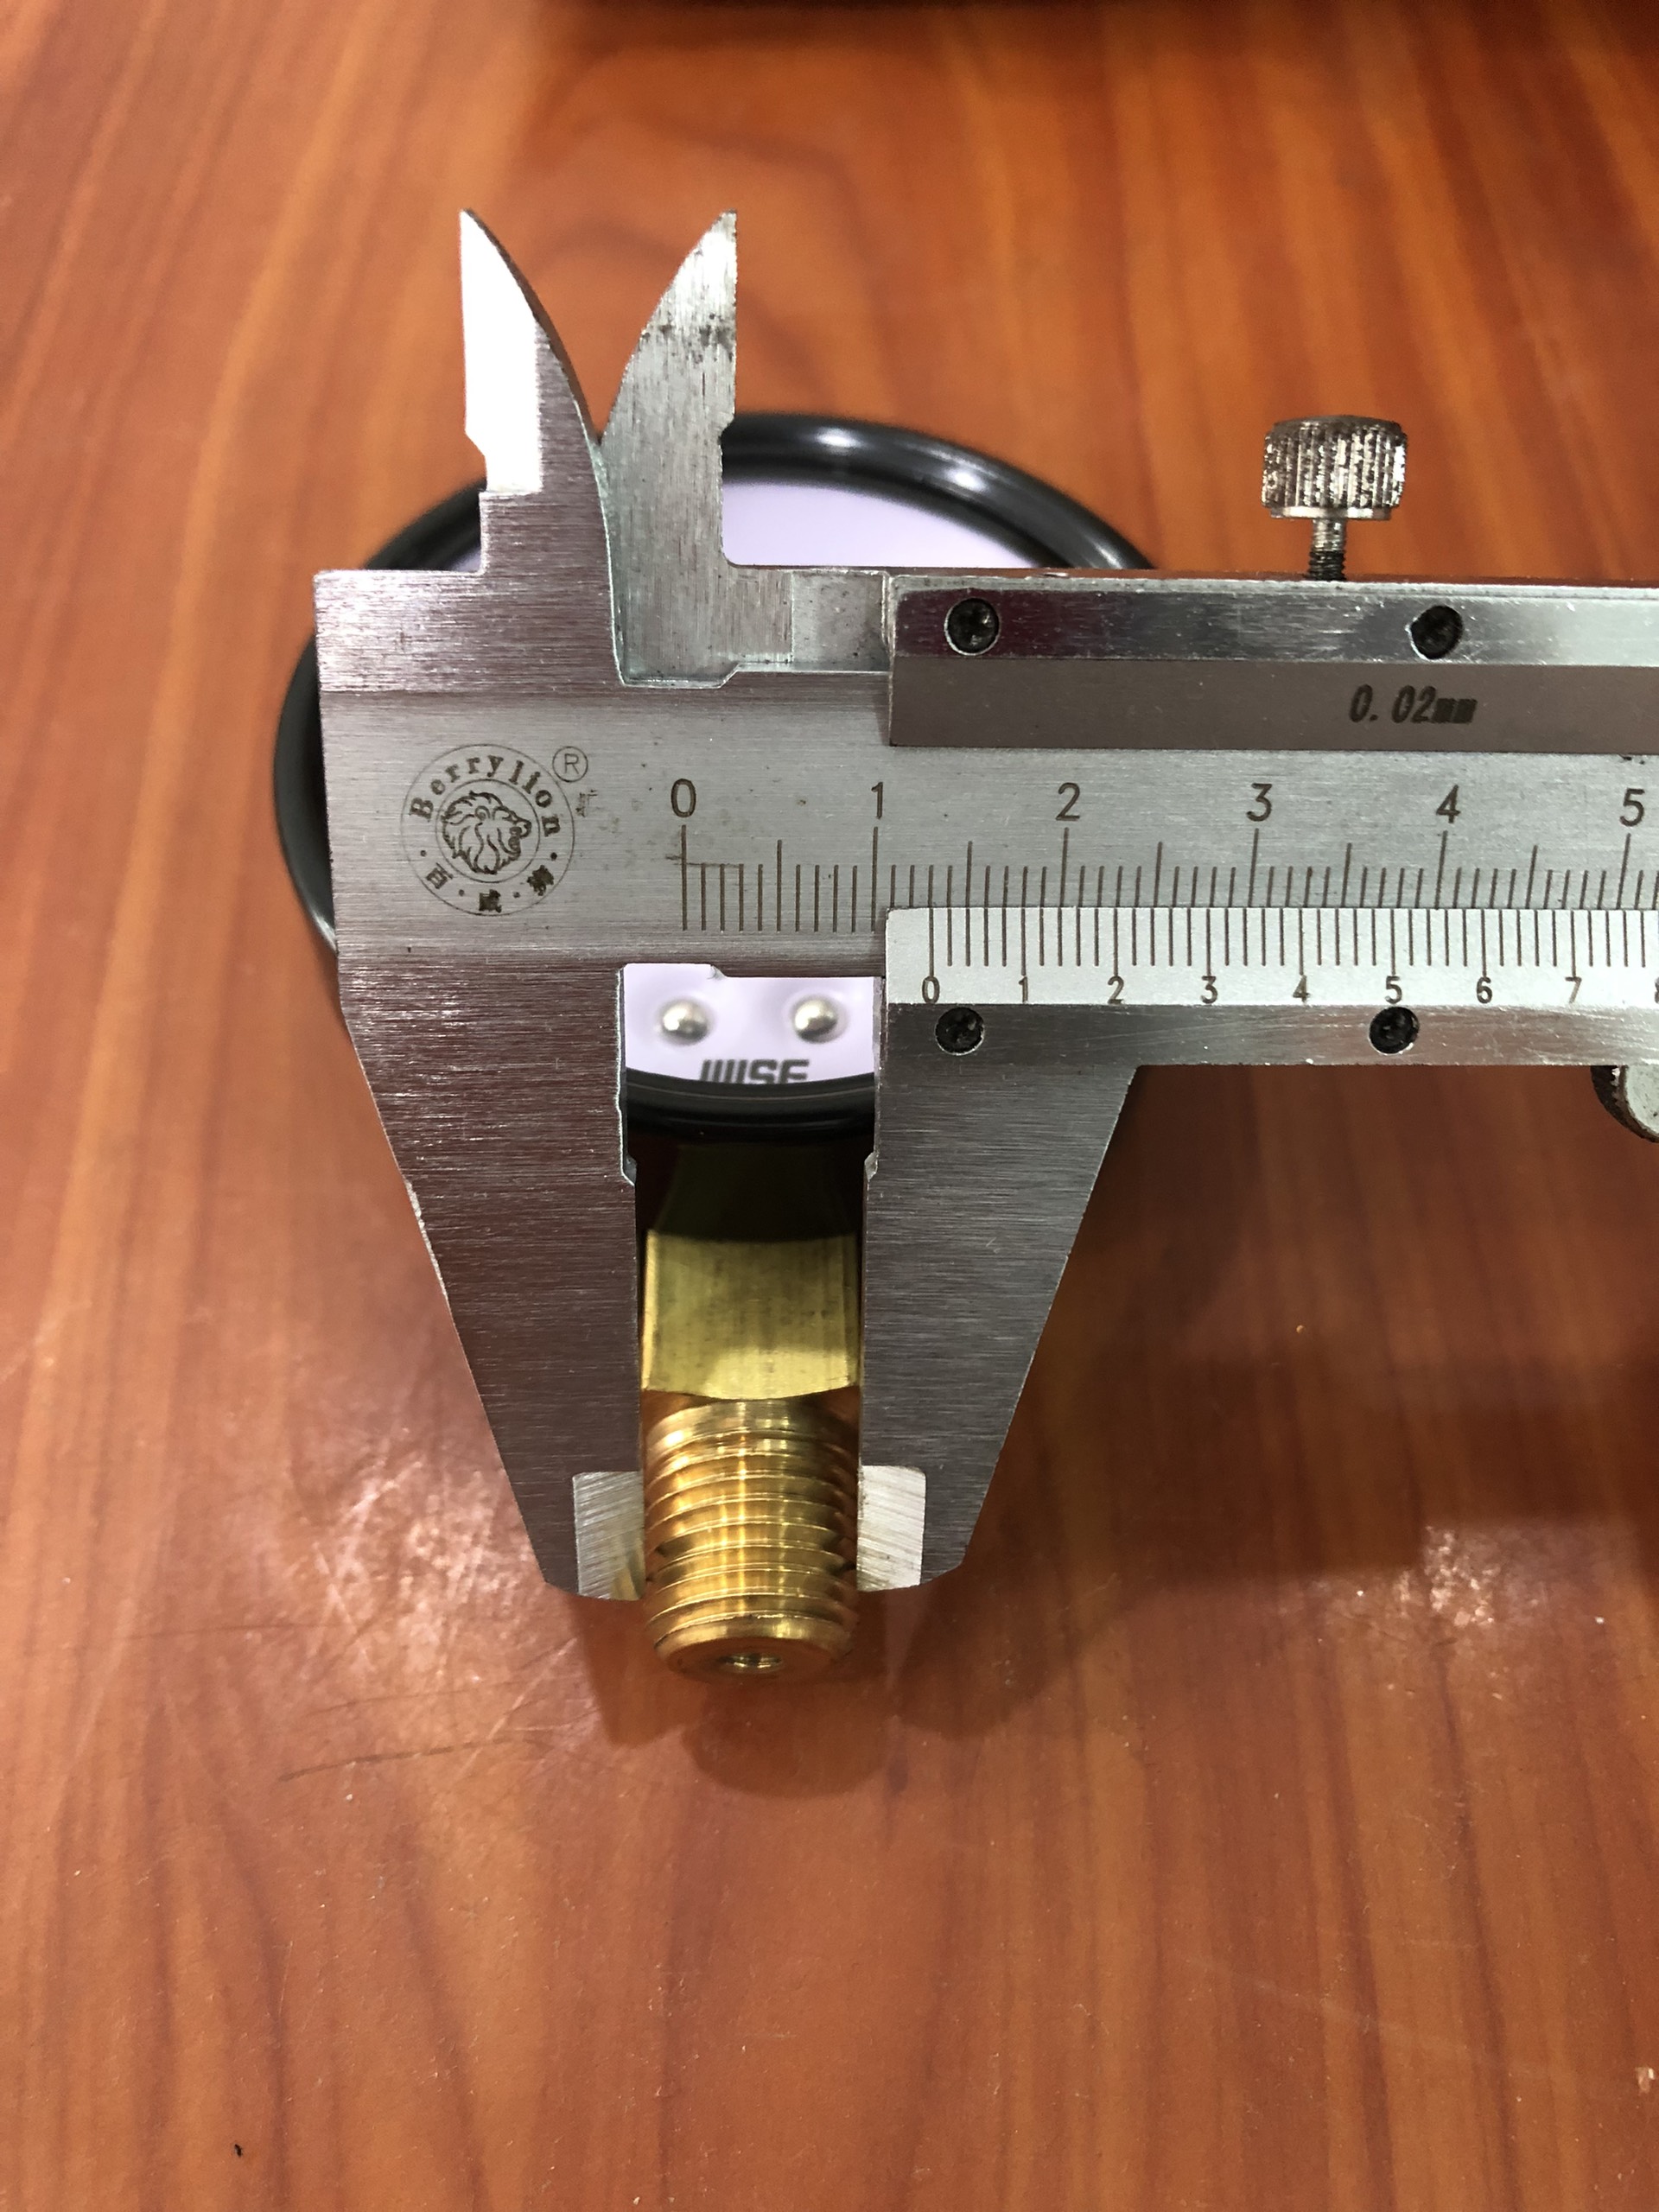 Dụng cụ đo áp suất P110-60A - dãy đo bar